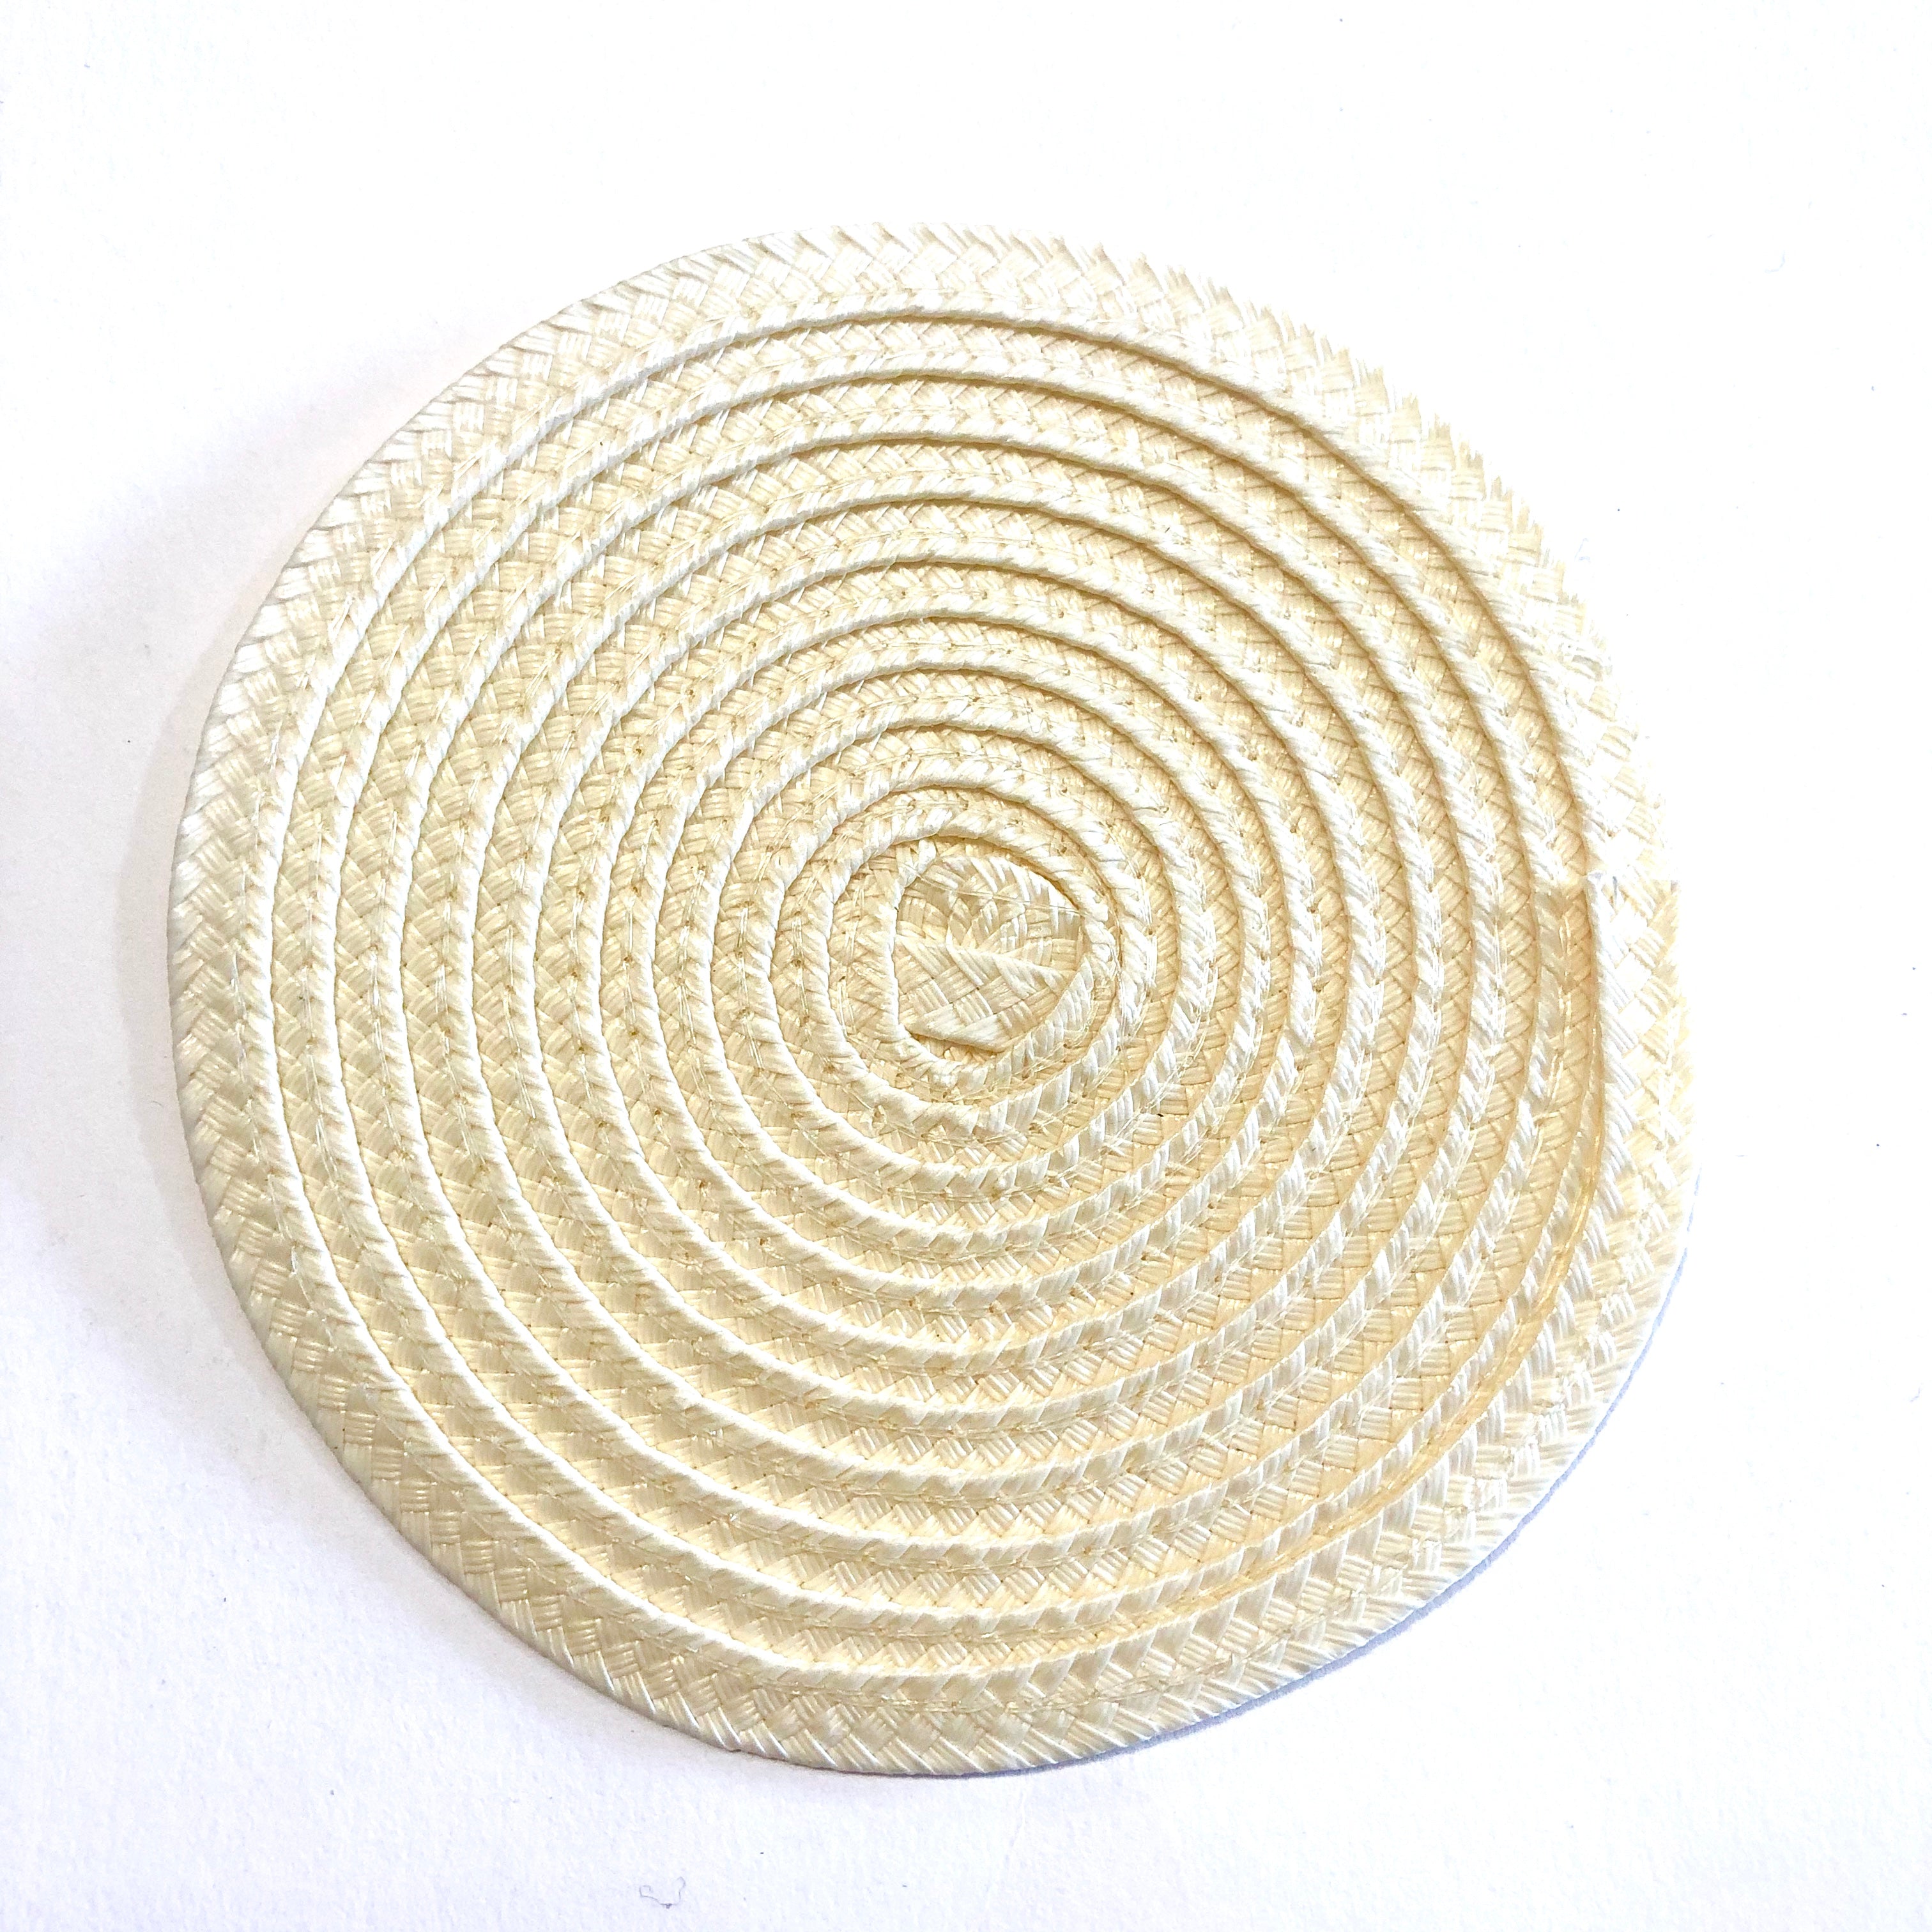 Polybraid 100mm Round Disc Millinery Fascinator Base x 10 pcs - Ivory